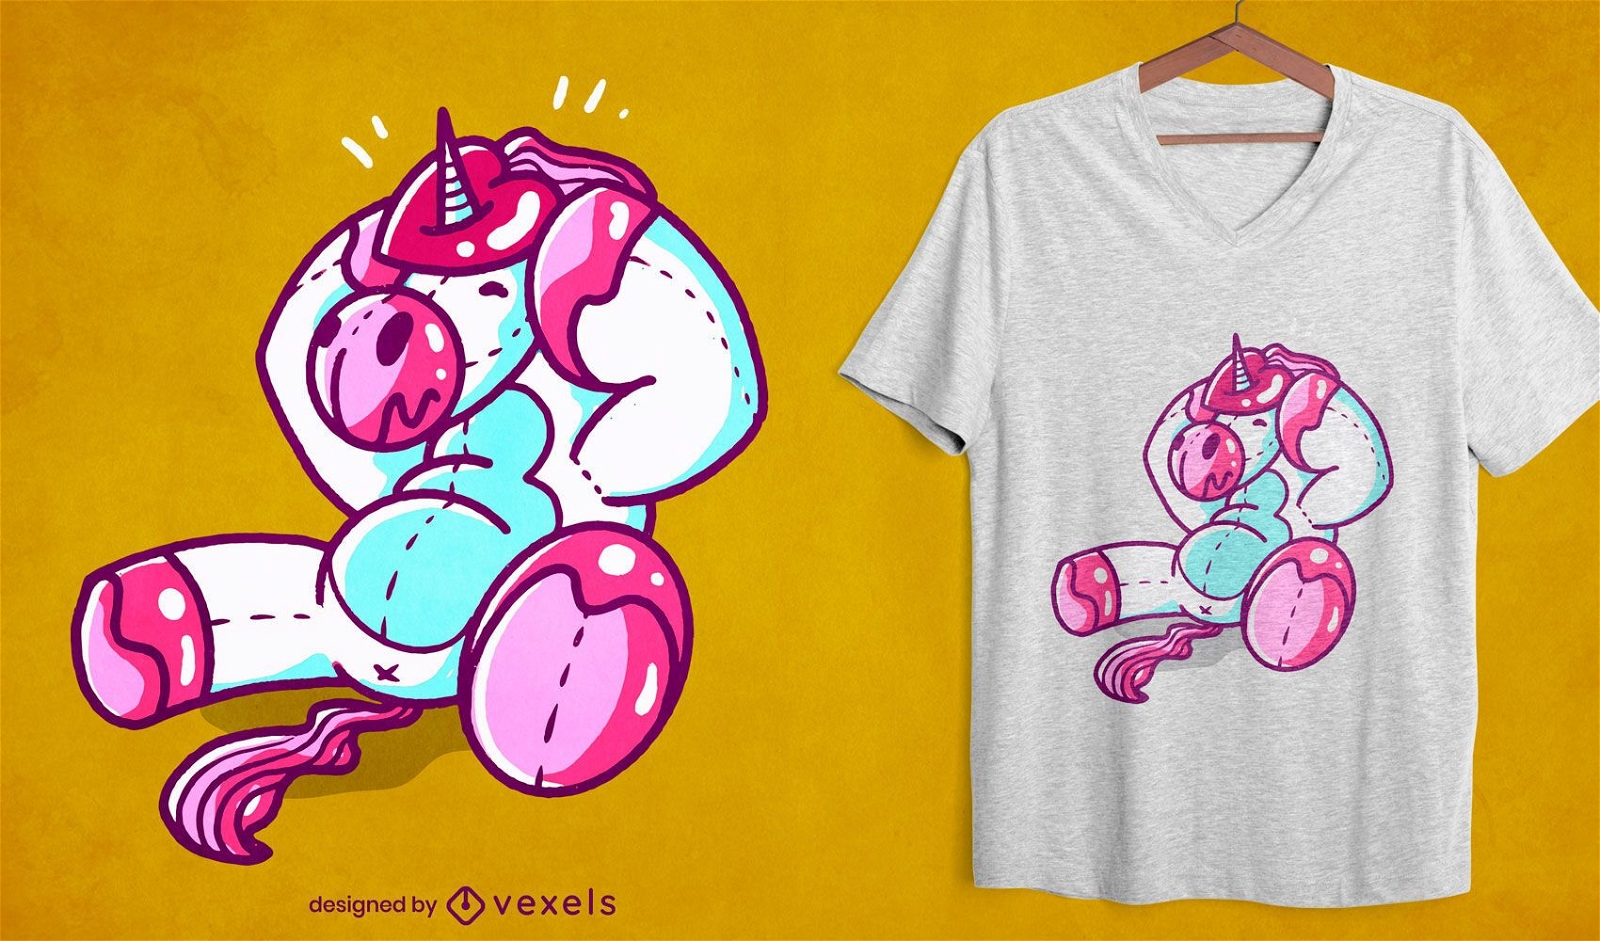 Stucked heart unicorn t-shirt design